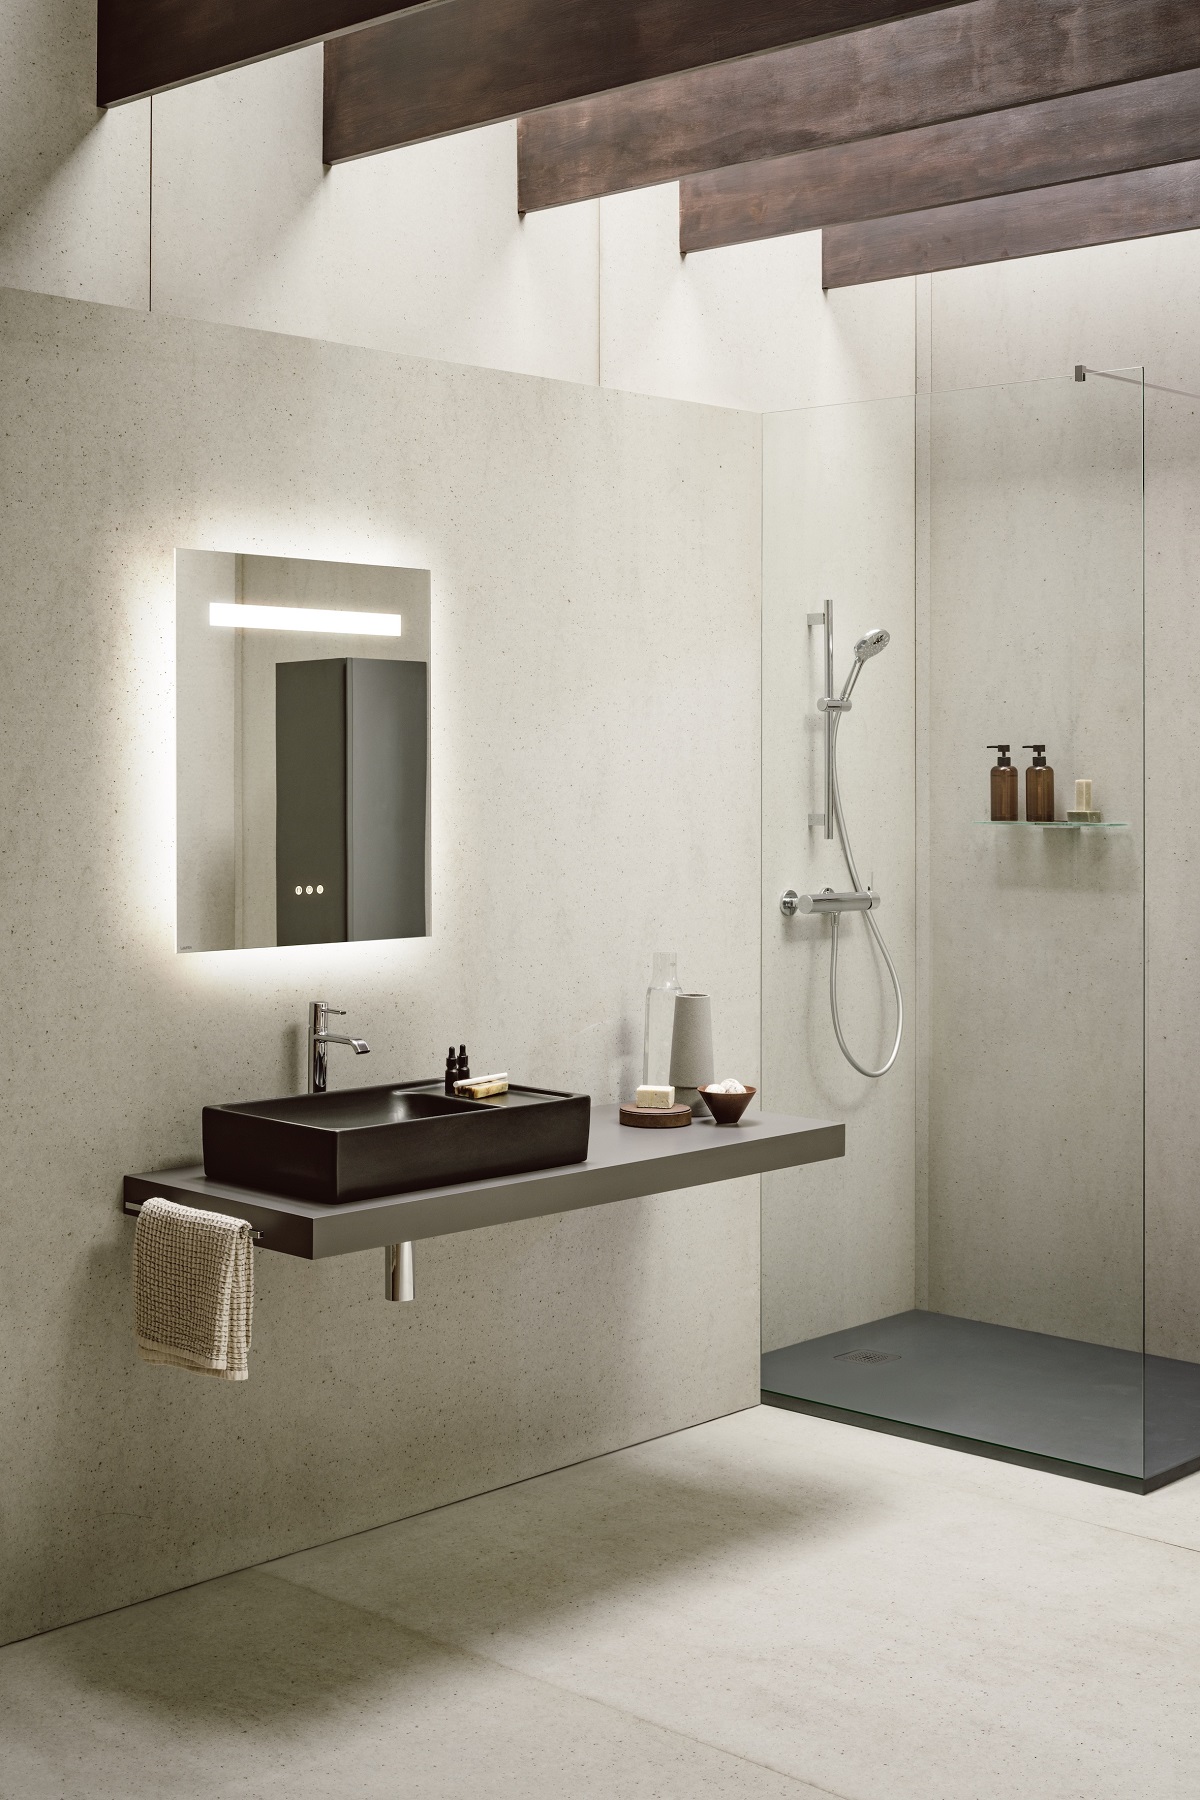 Laufen MEDA square surface mounted basin in minimal stone coloured bathroom